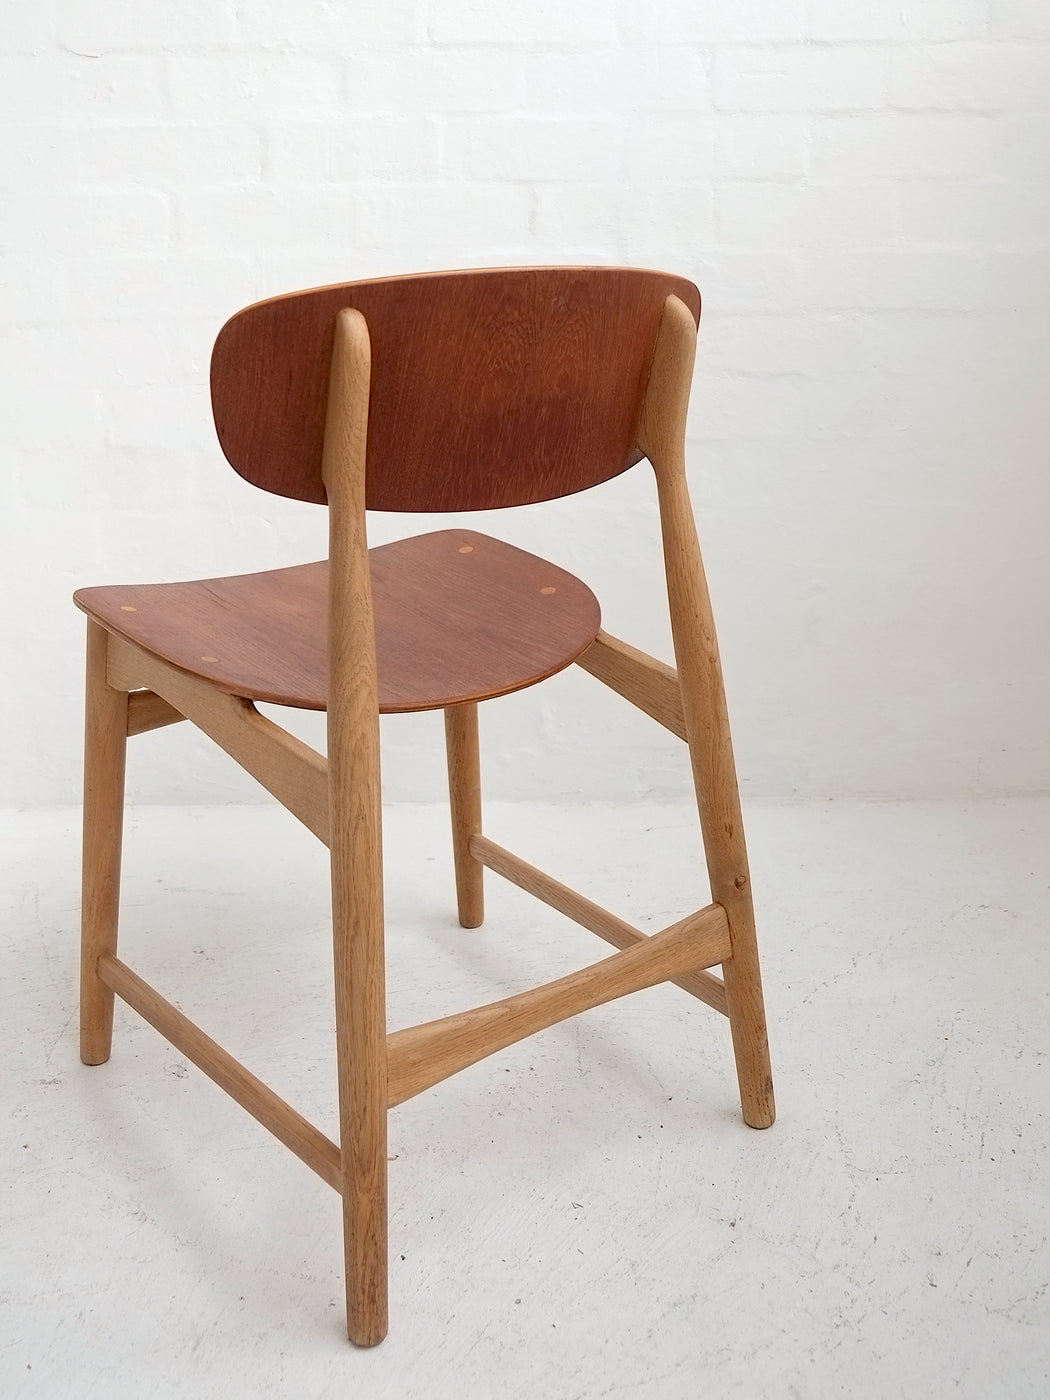 Jens Hjorth 'Model 308' Chair